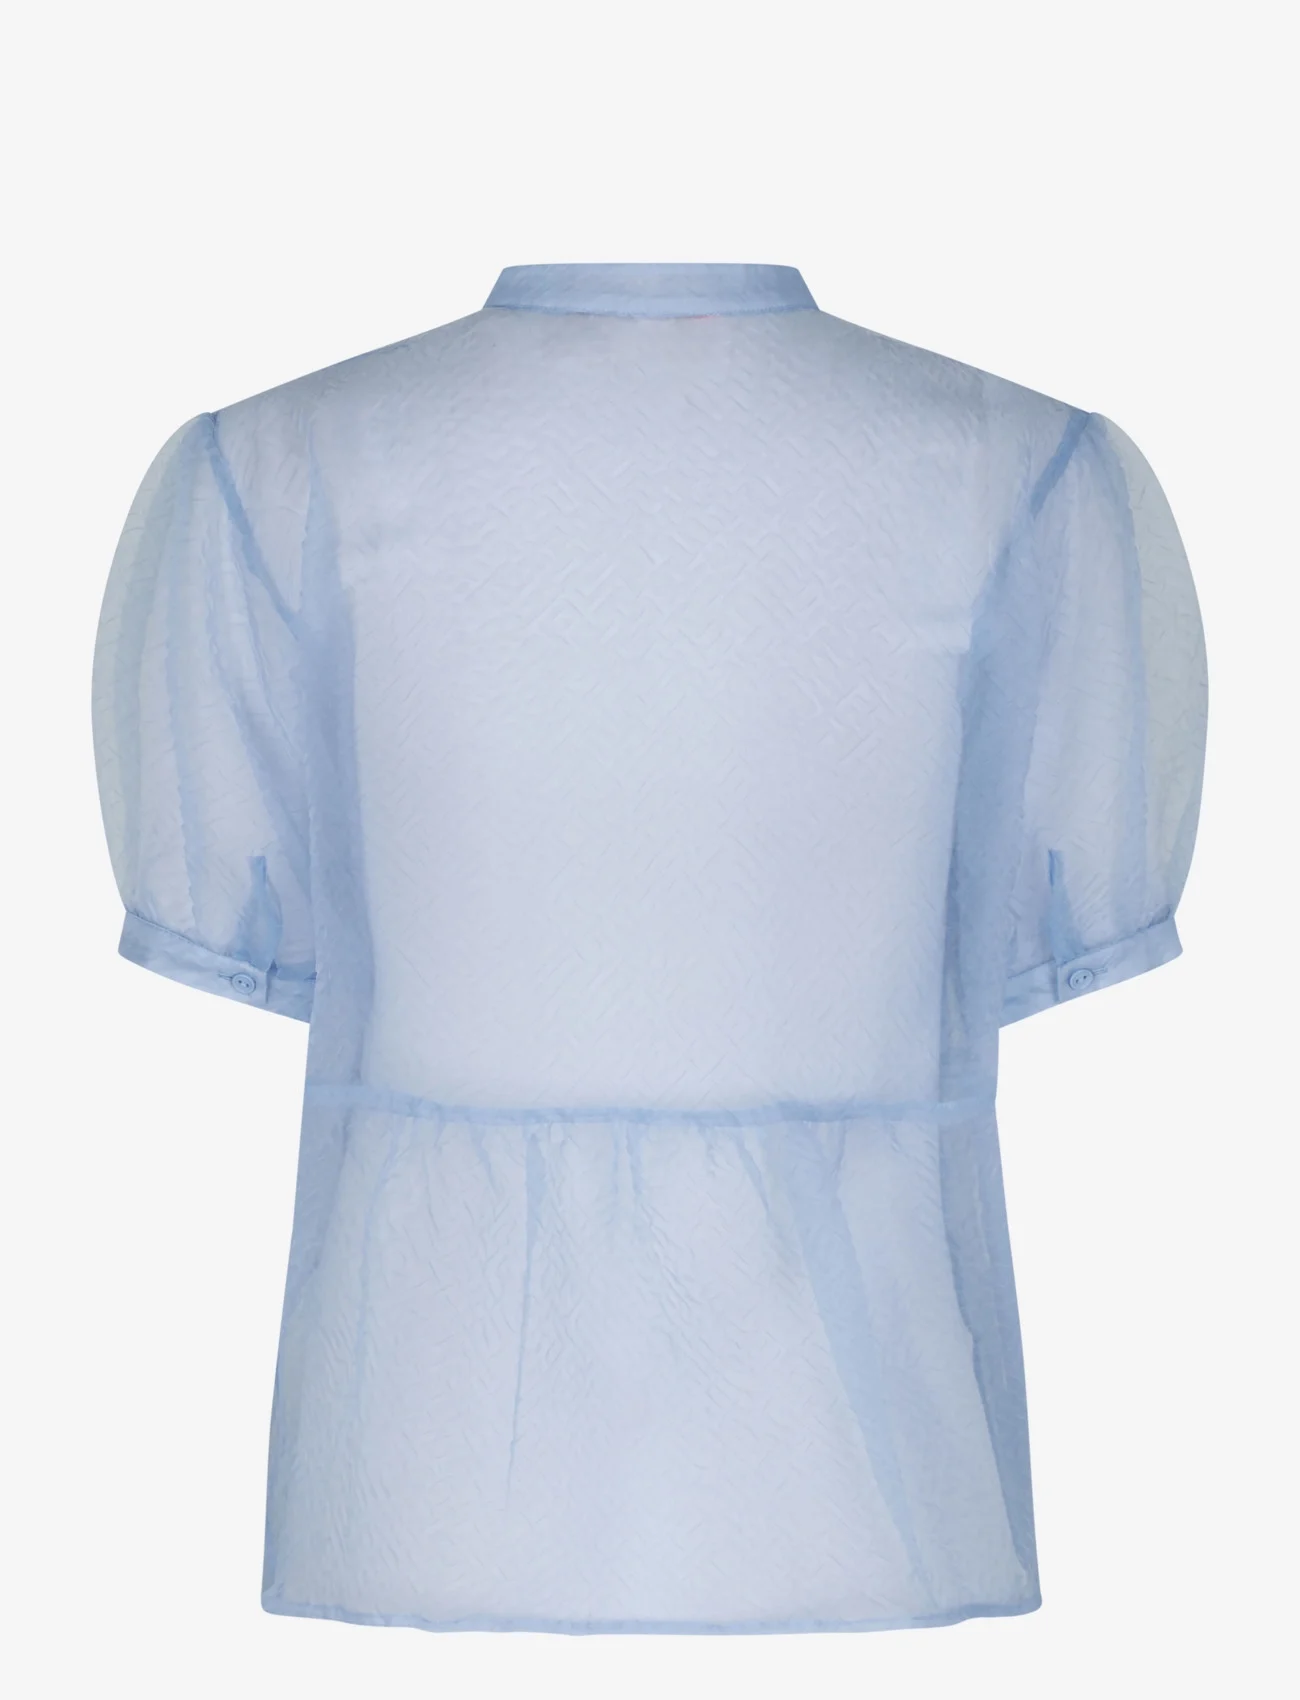 Custommade - Cam - short-sleeved shirts - 417 halogen blue - 1